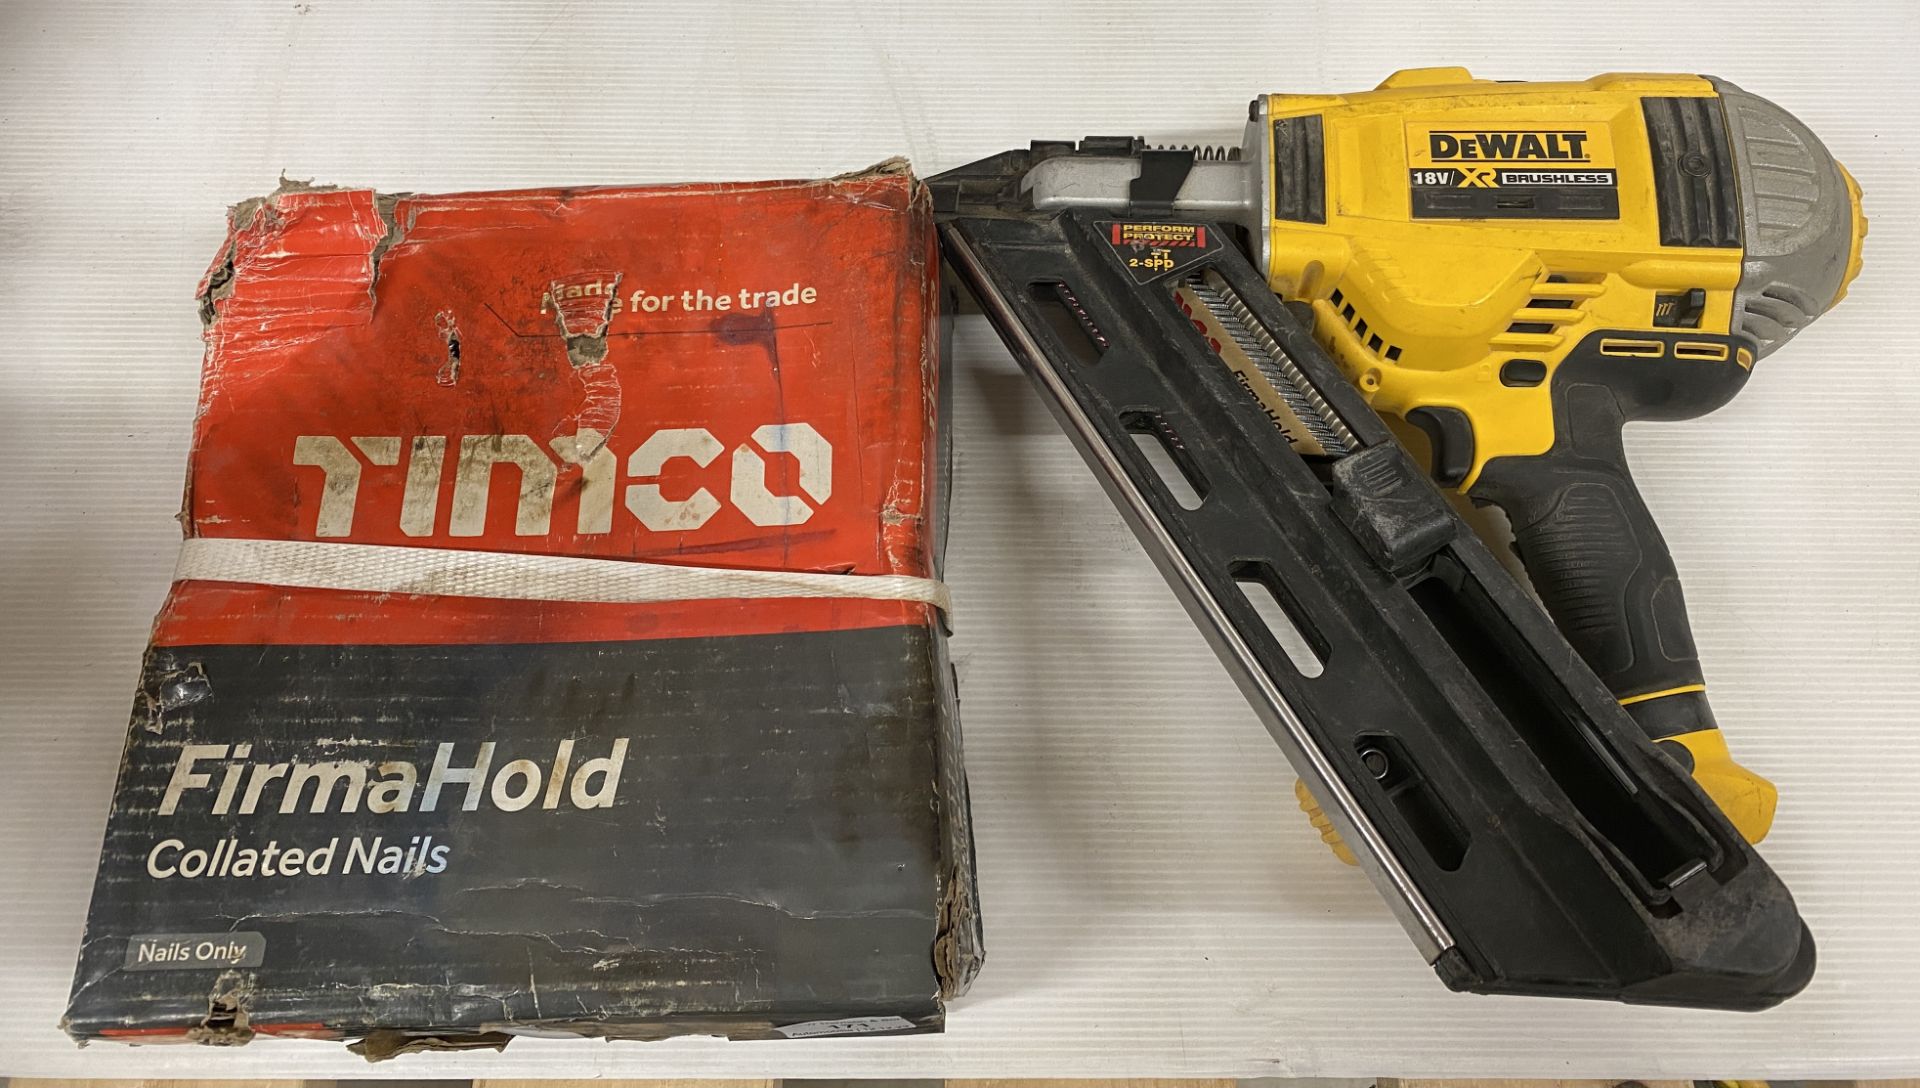 A similar DeWalt DCK264P2 nail gun and box of Timco firmahold nails (no battery or charger)